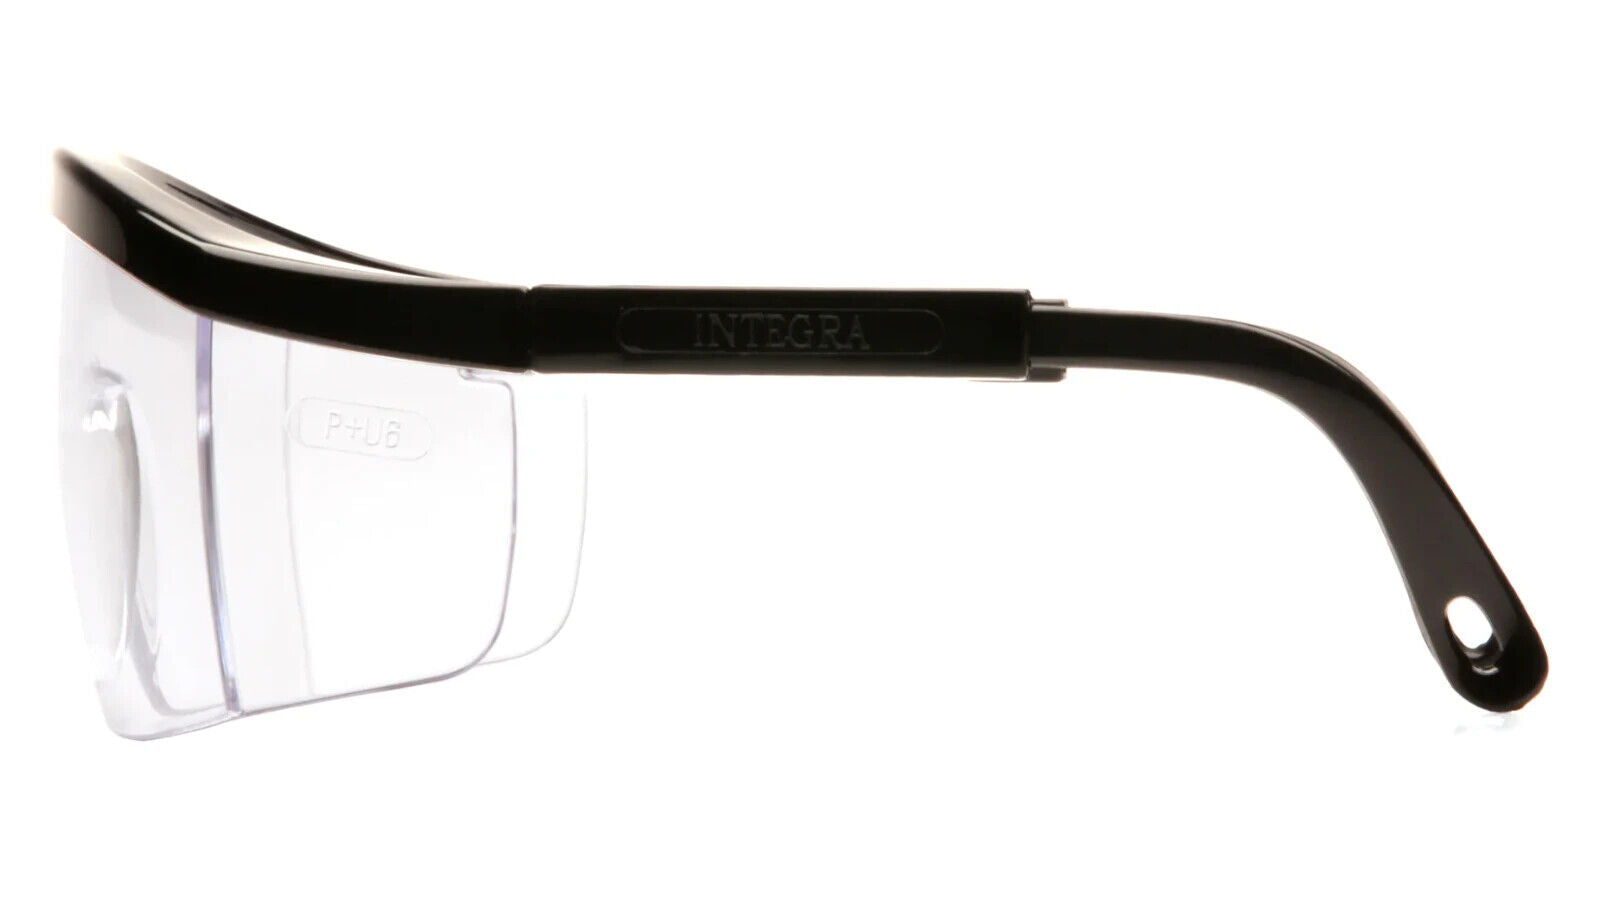 Shooter's Edge OTG Over-the-Glasses Z87.1 Safety Shooting Glasses Clear Lens